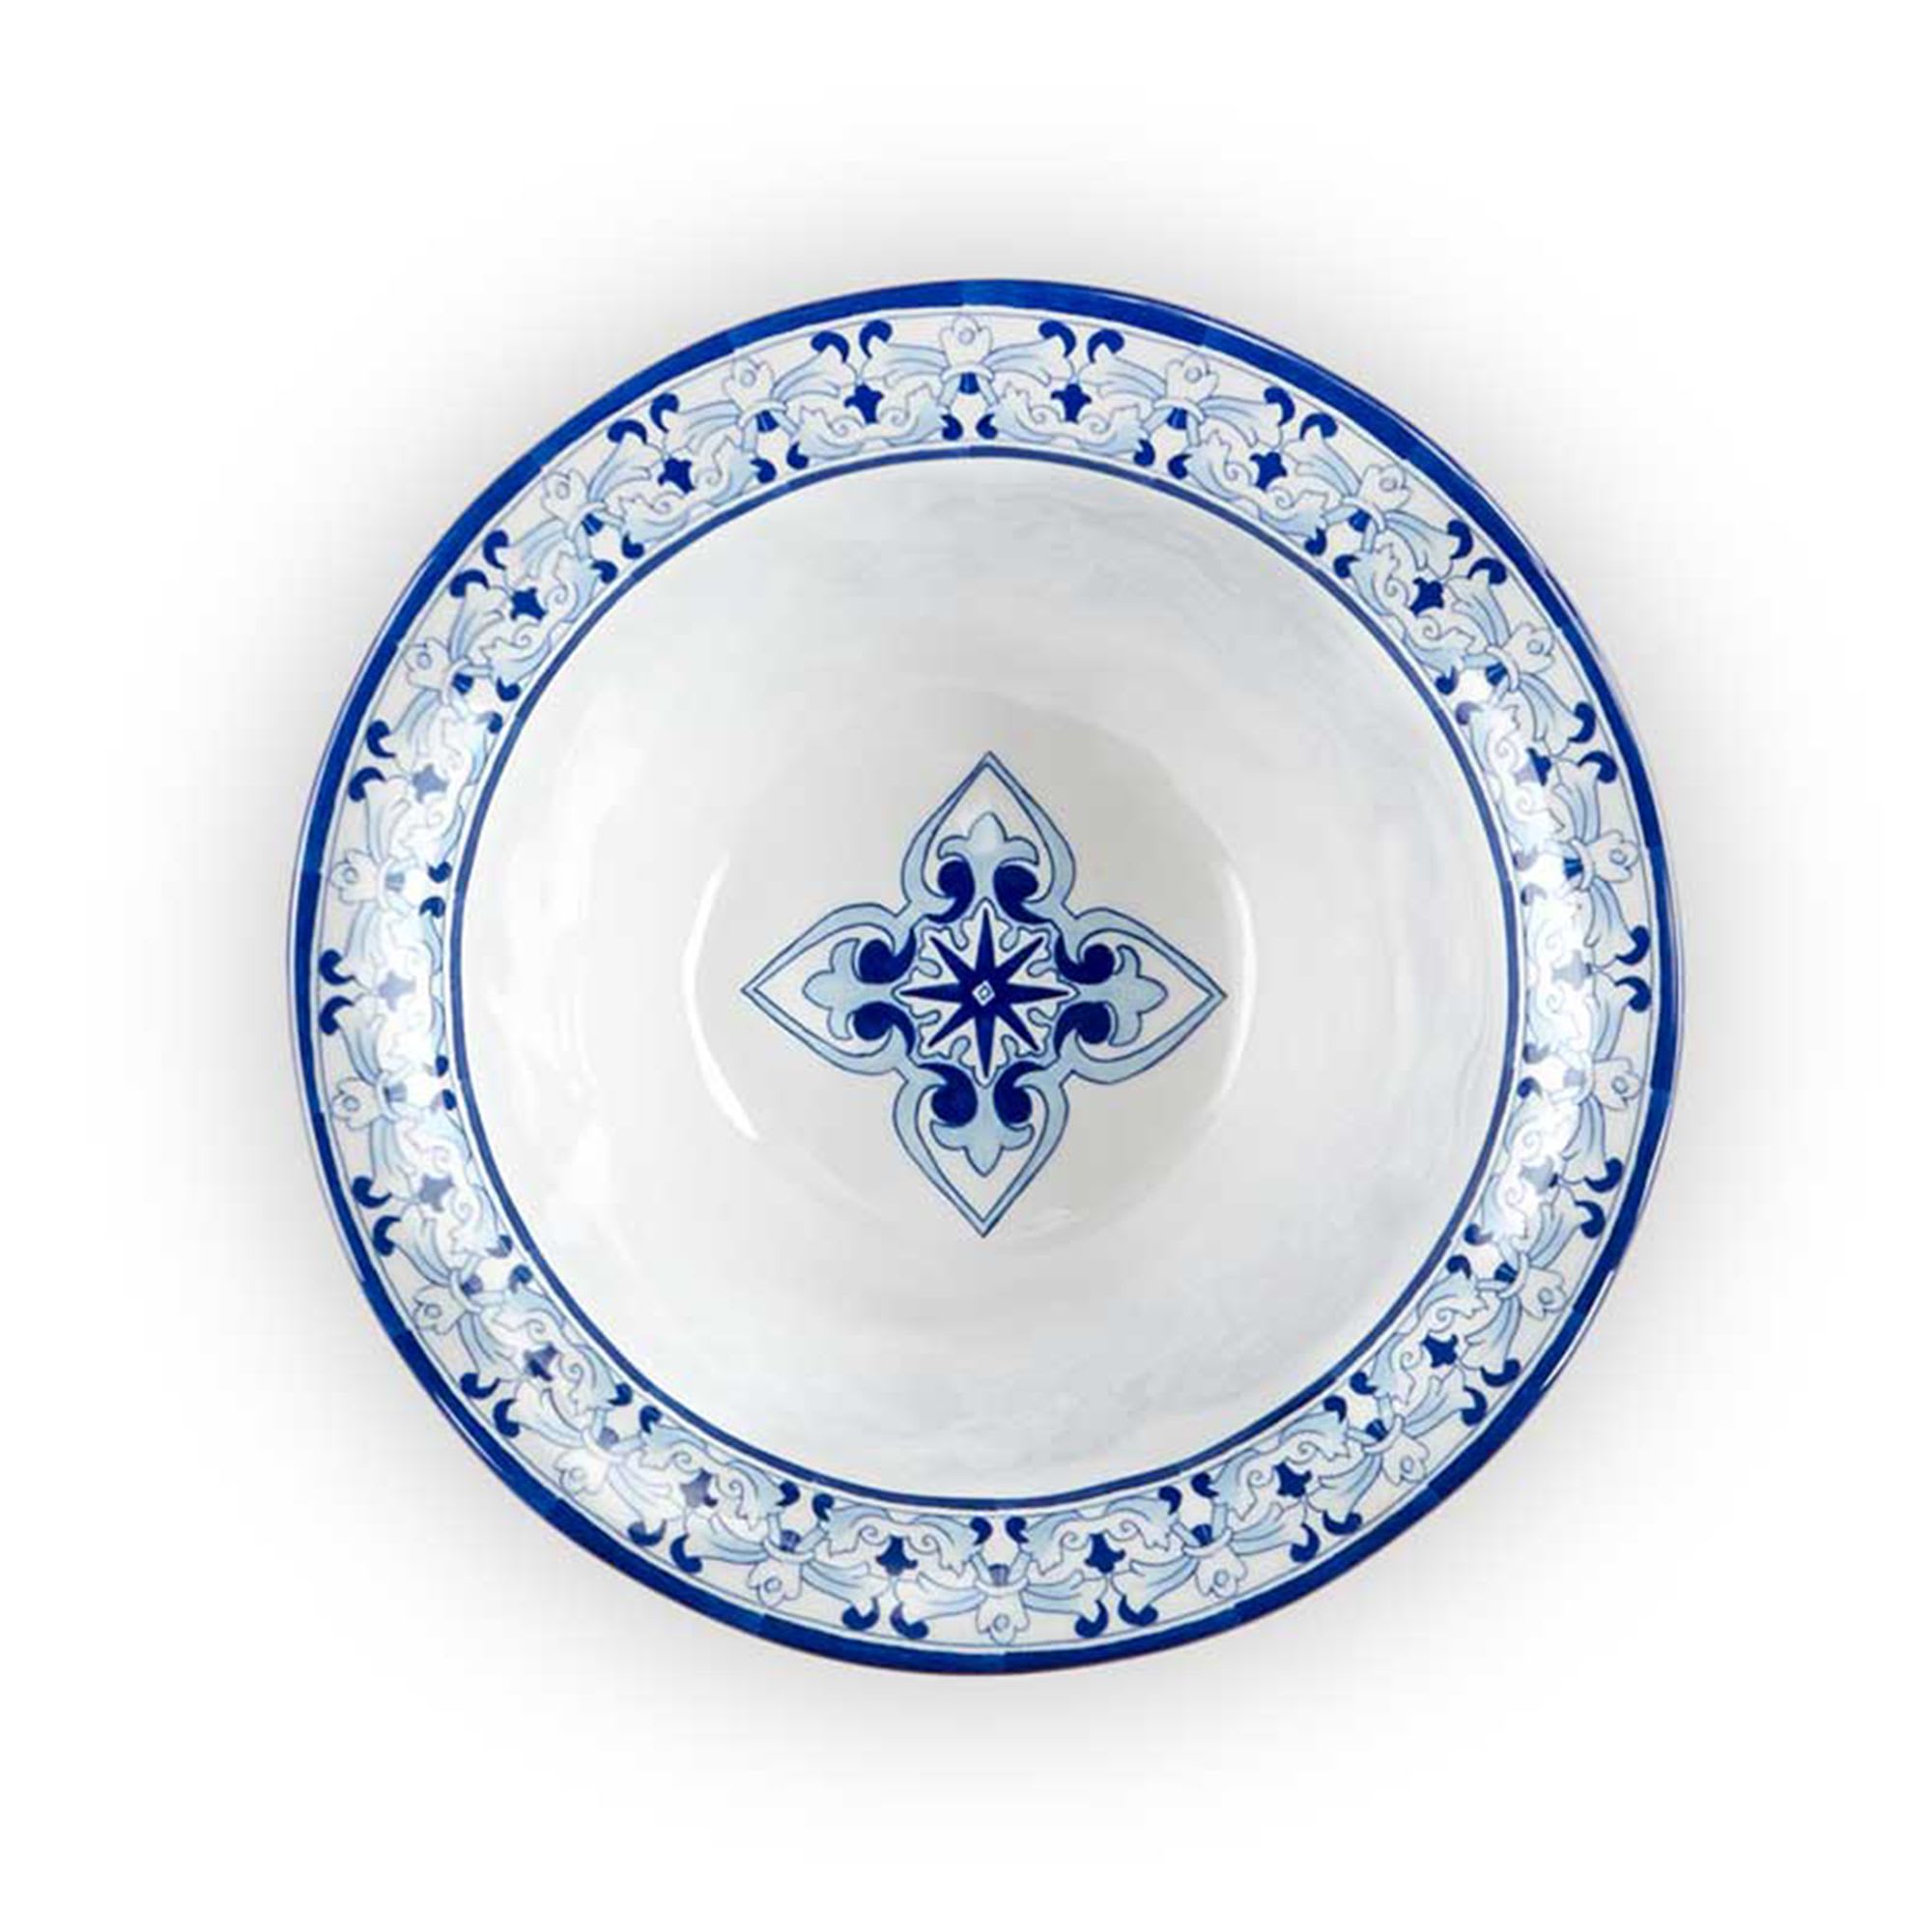 Tupperware Talavera Design Bowl and Seal Blue & White 7712 